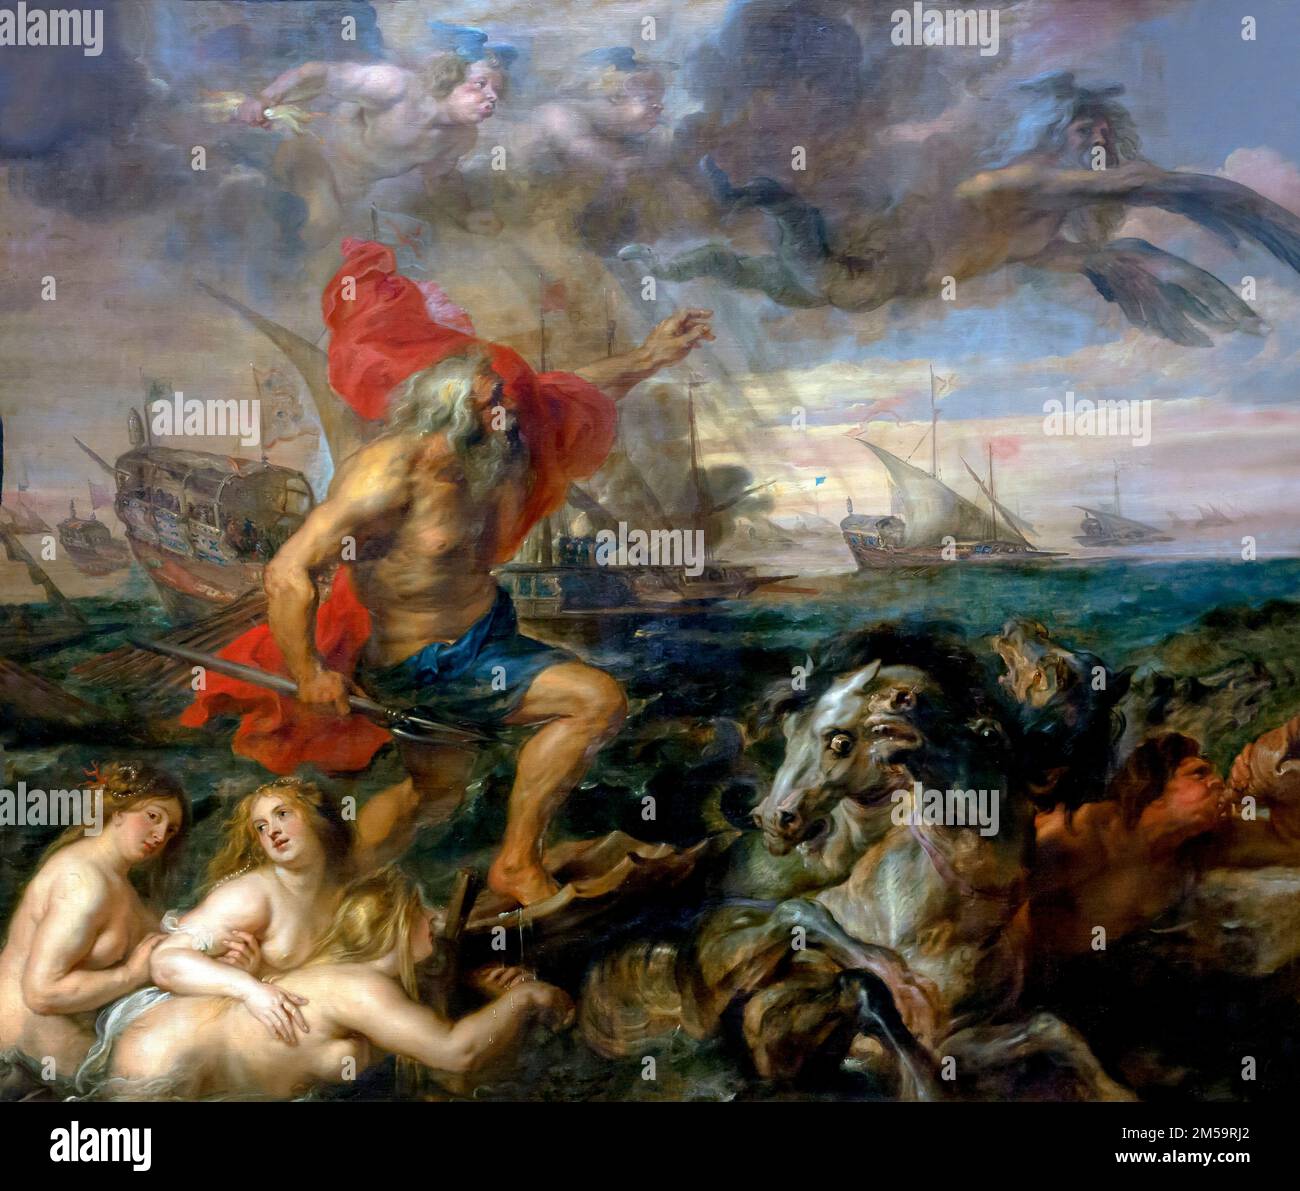 Quos Ego, Neptun beruhigt die Wellen, Peter Paul Rubens, circa 1635, Gemaldegalerie Alte Meister, Dresden, Deutschland, Europa Stockfoto